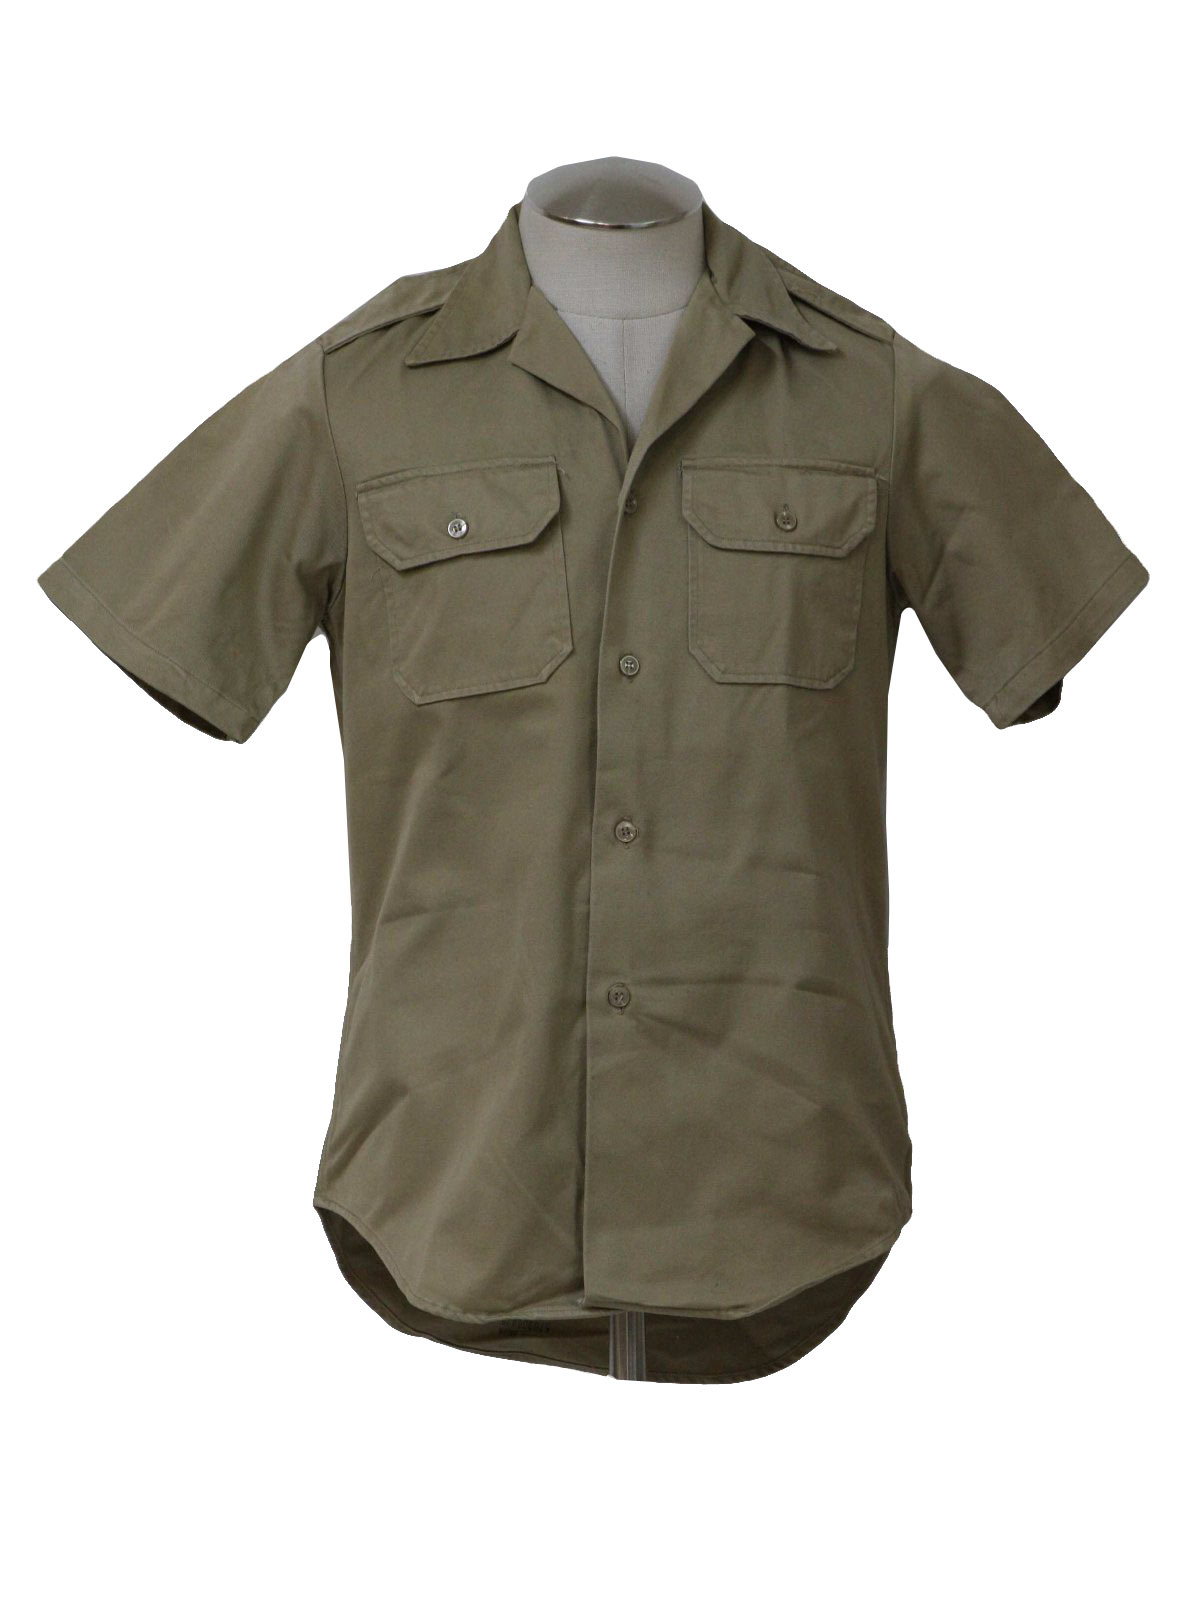 Retro 40s Shirt: Late 40s -No Label- Mens khaki tan cotton twill US ...